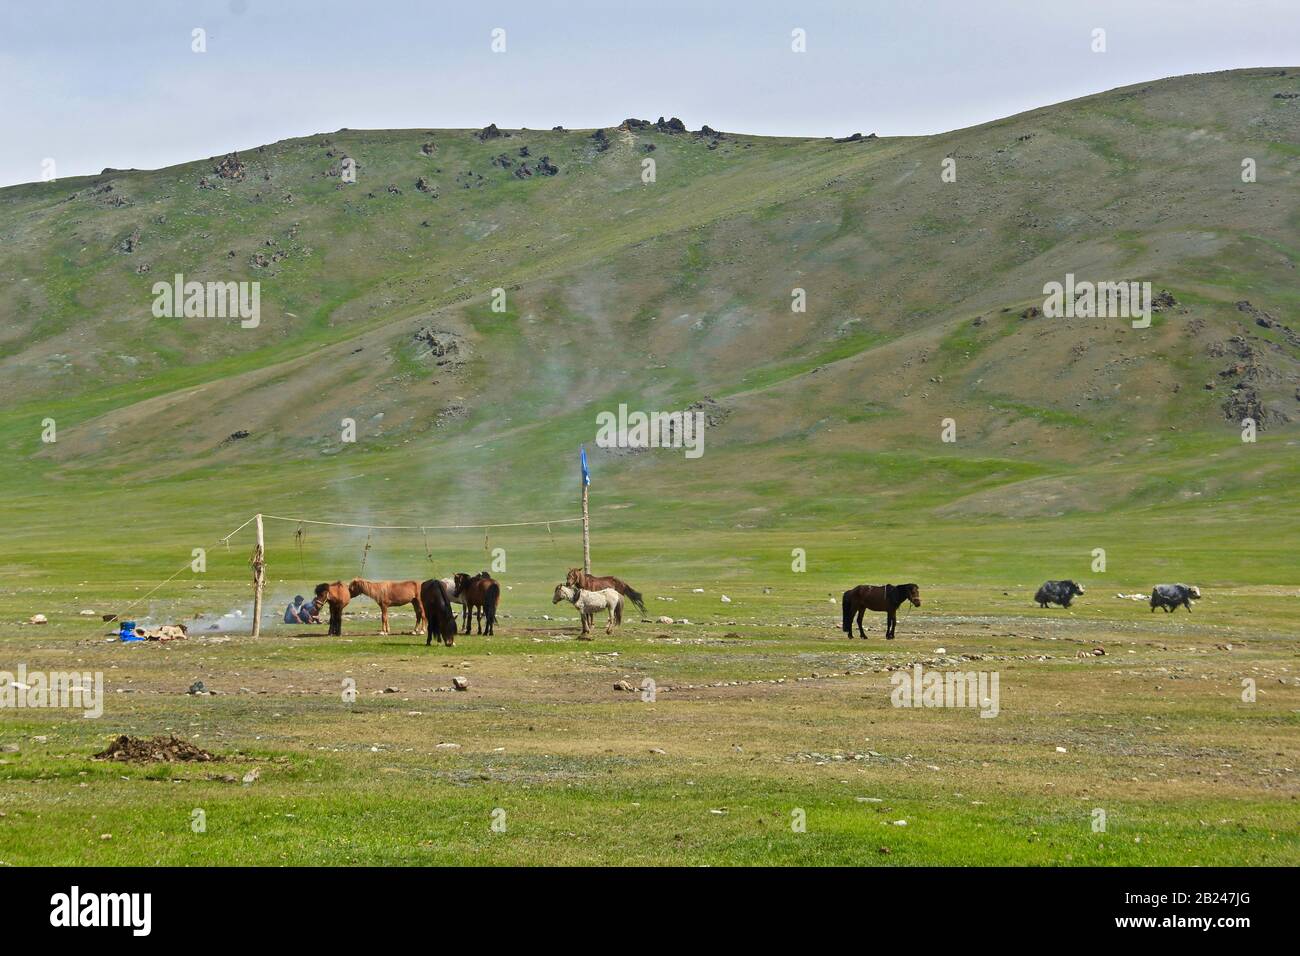 Animals of Mongolia. Horse, yak, birds and sheeps Stock Photo